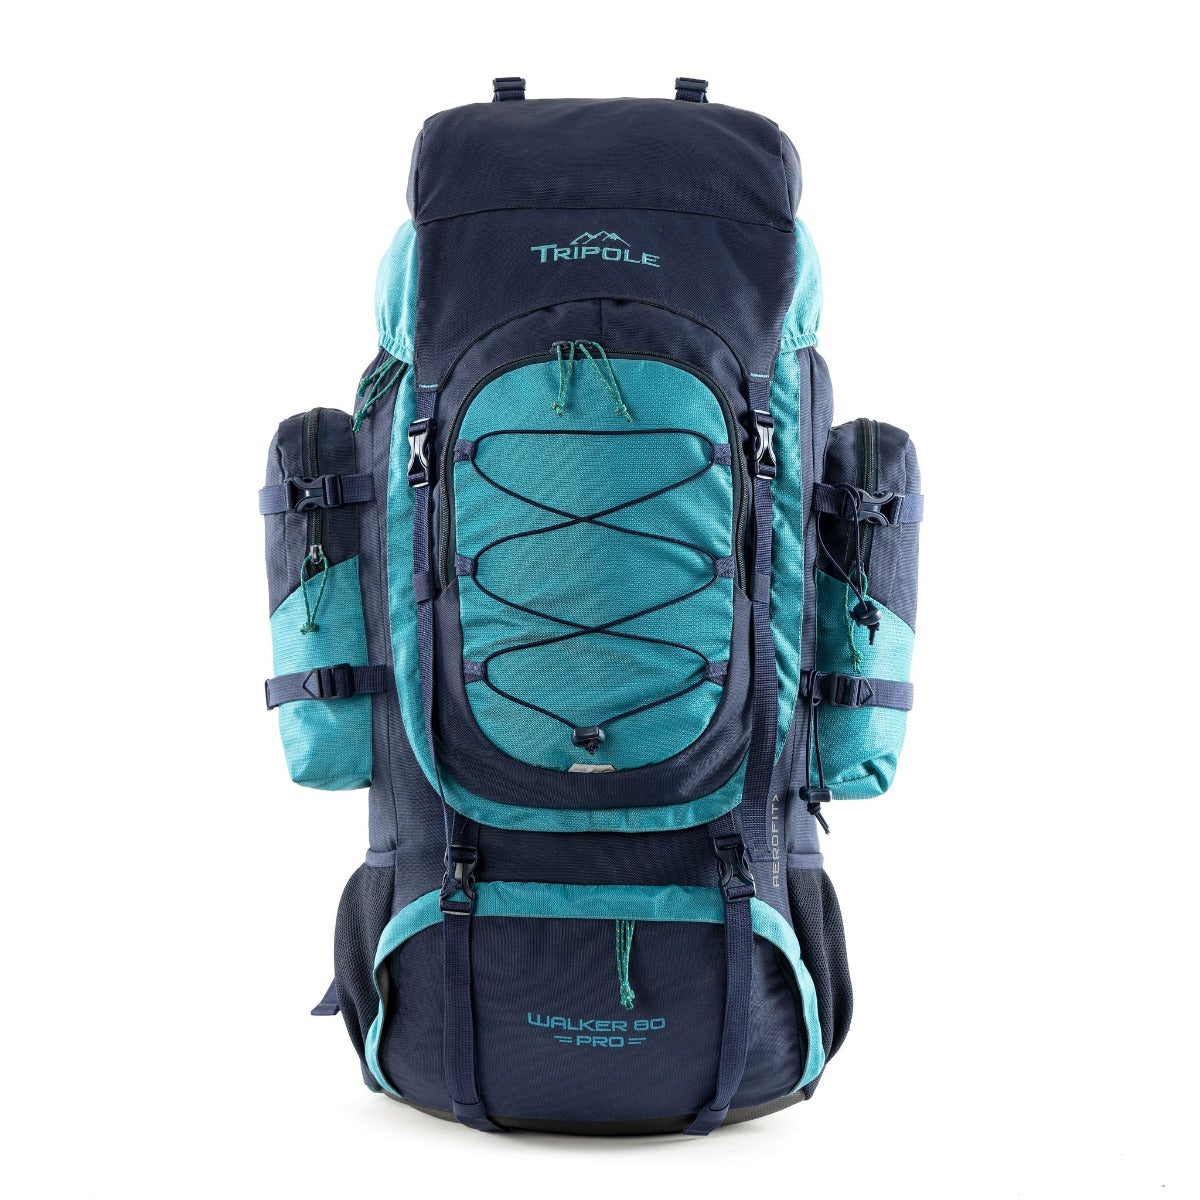 Walker Pro Trekking and Hiking Rucksack - 80 Litre - Blue 3